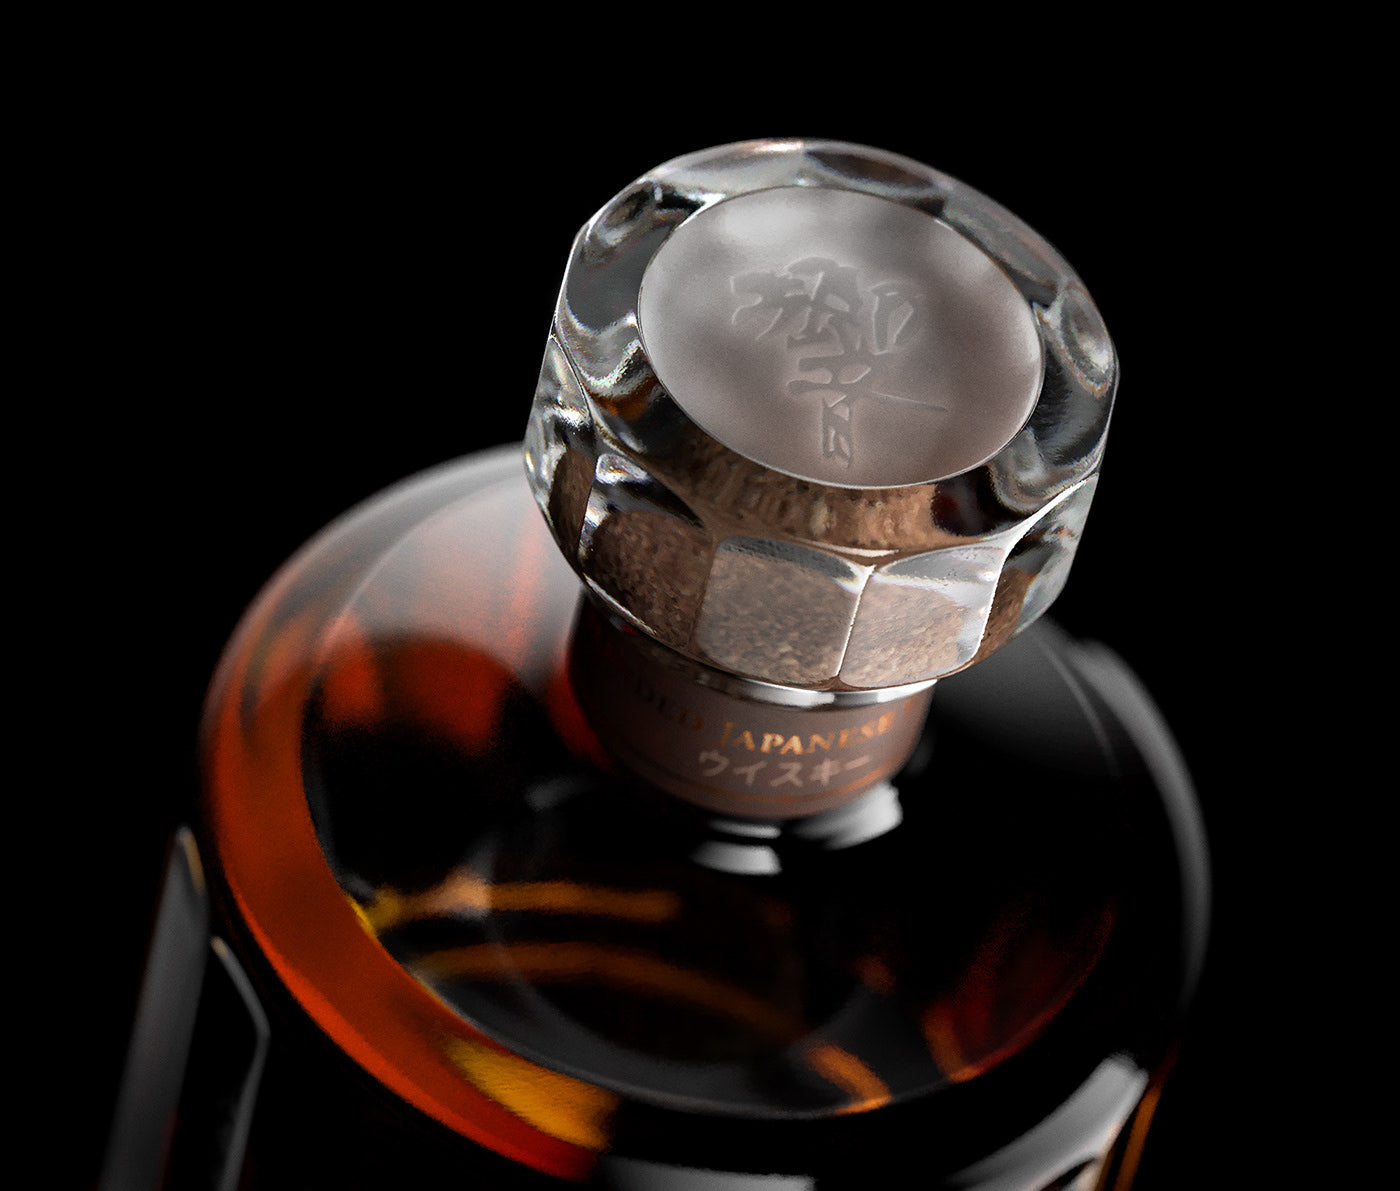 Hibiki 21YO Blended Japanese Whisky 700ml